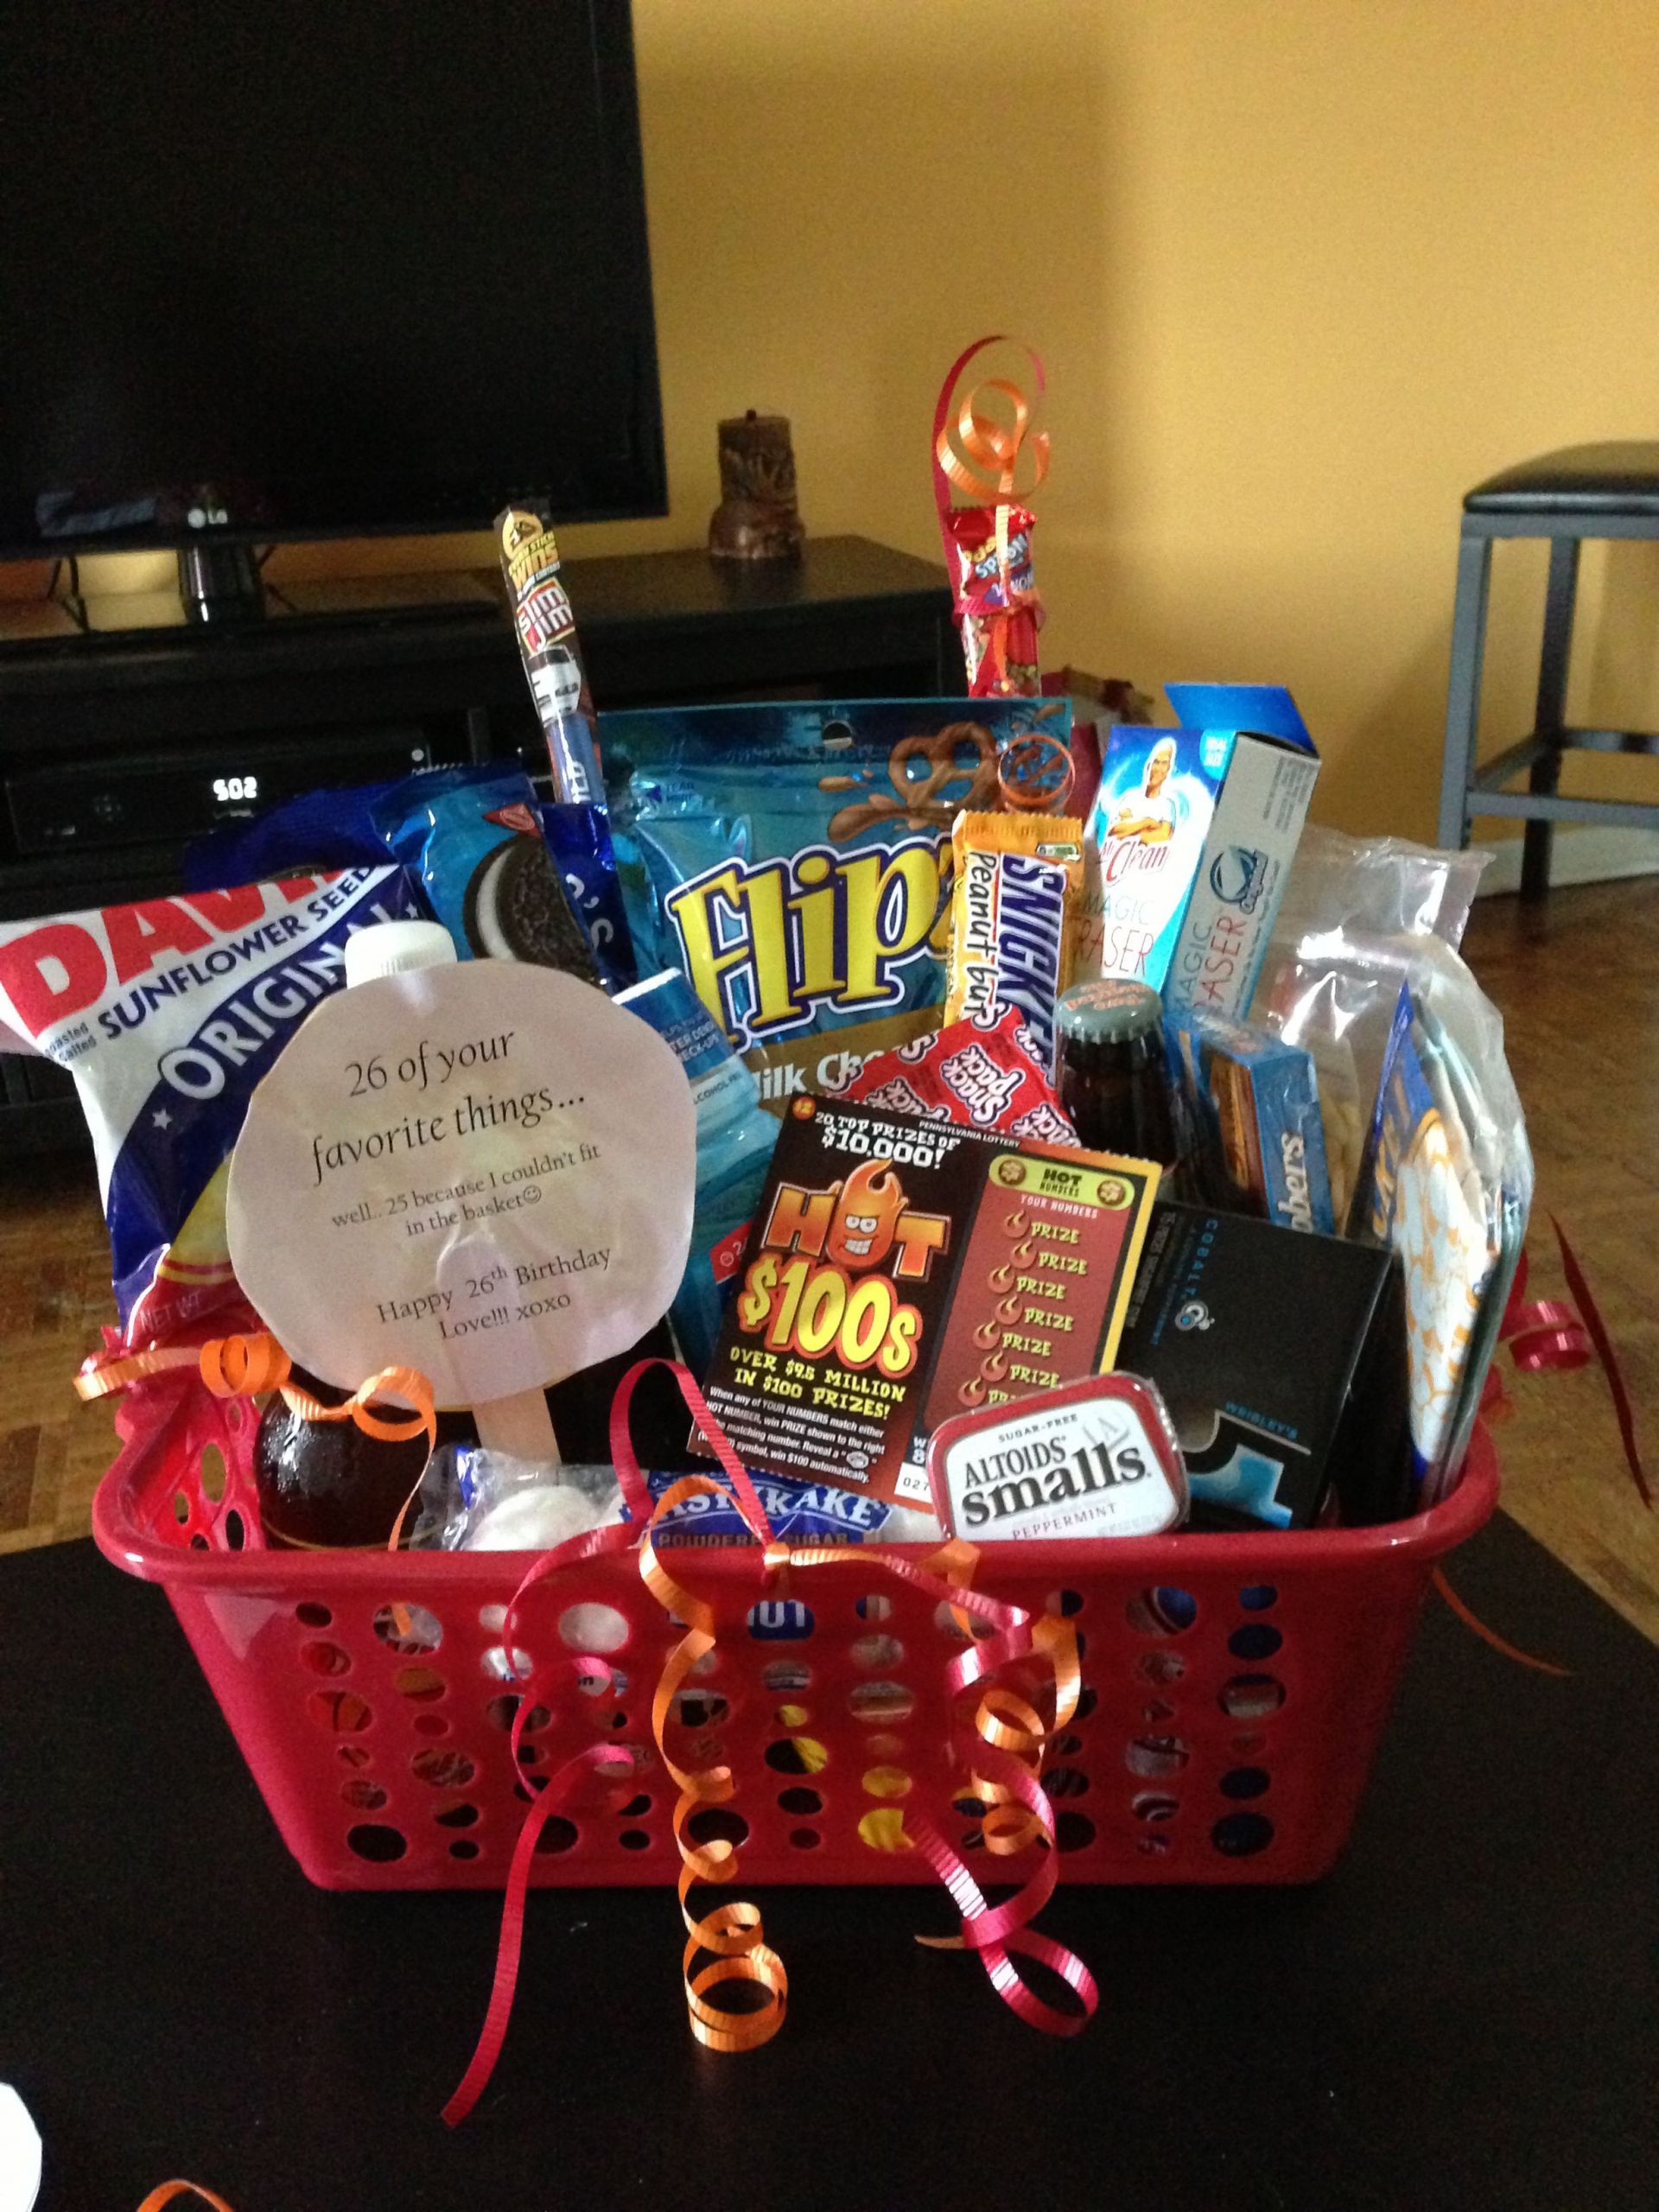 Birthday Gifts For Boyfriend
 Boyfriend birthday basket 26 of his favorite things for